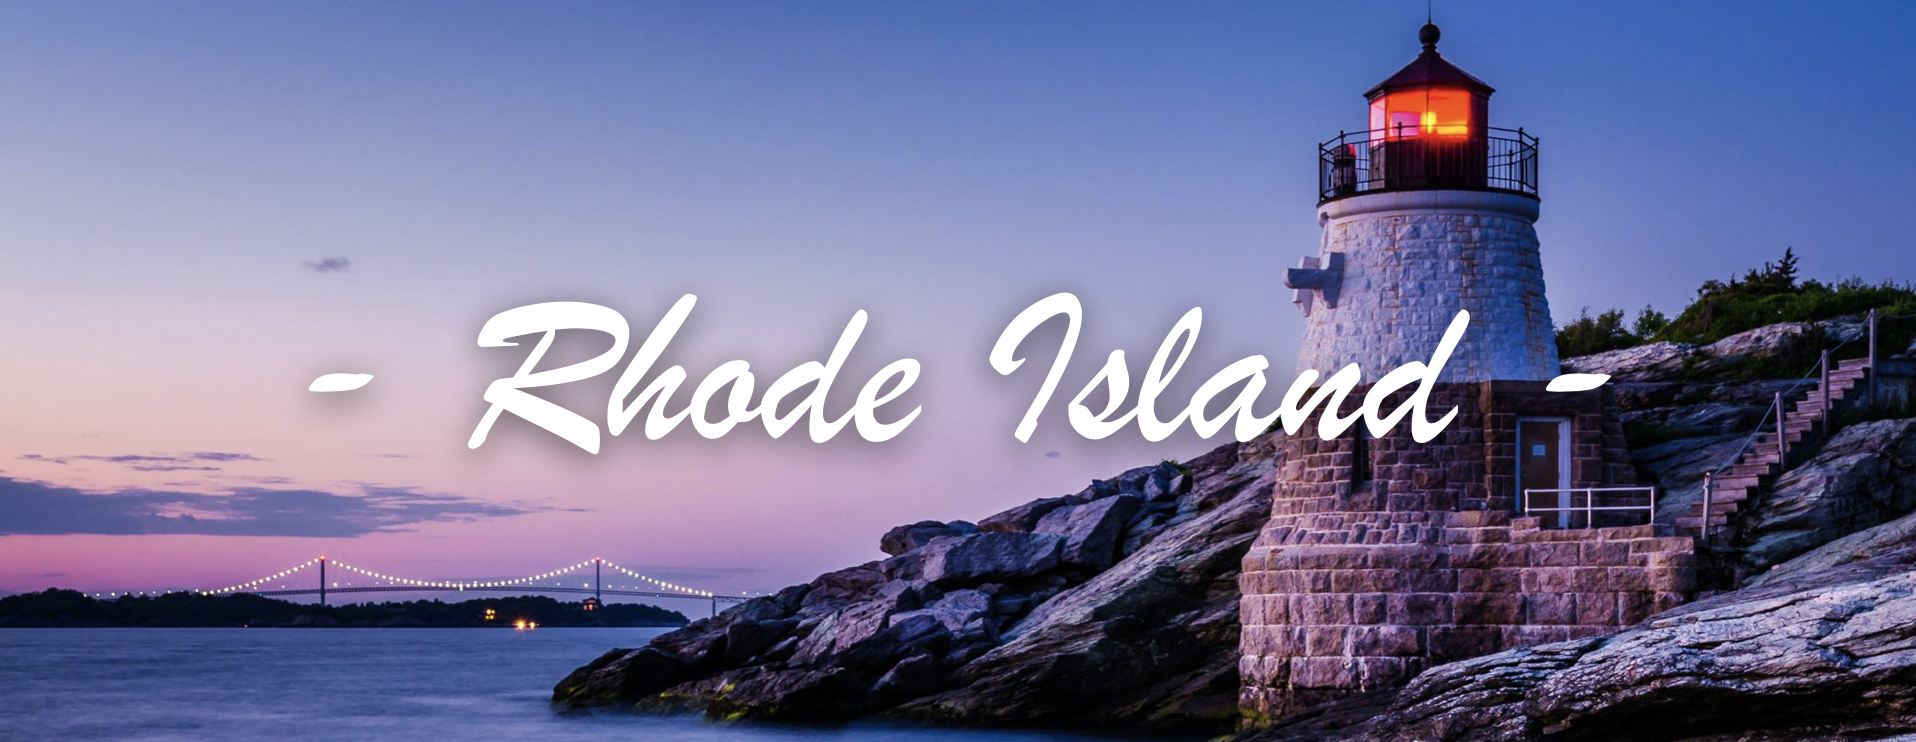 Rhode Island community image